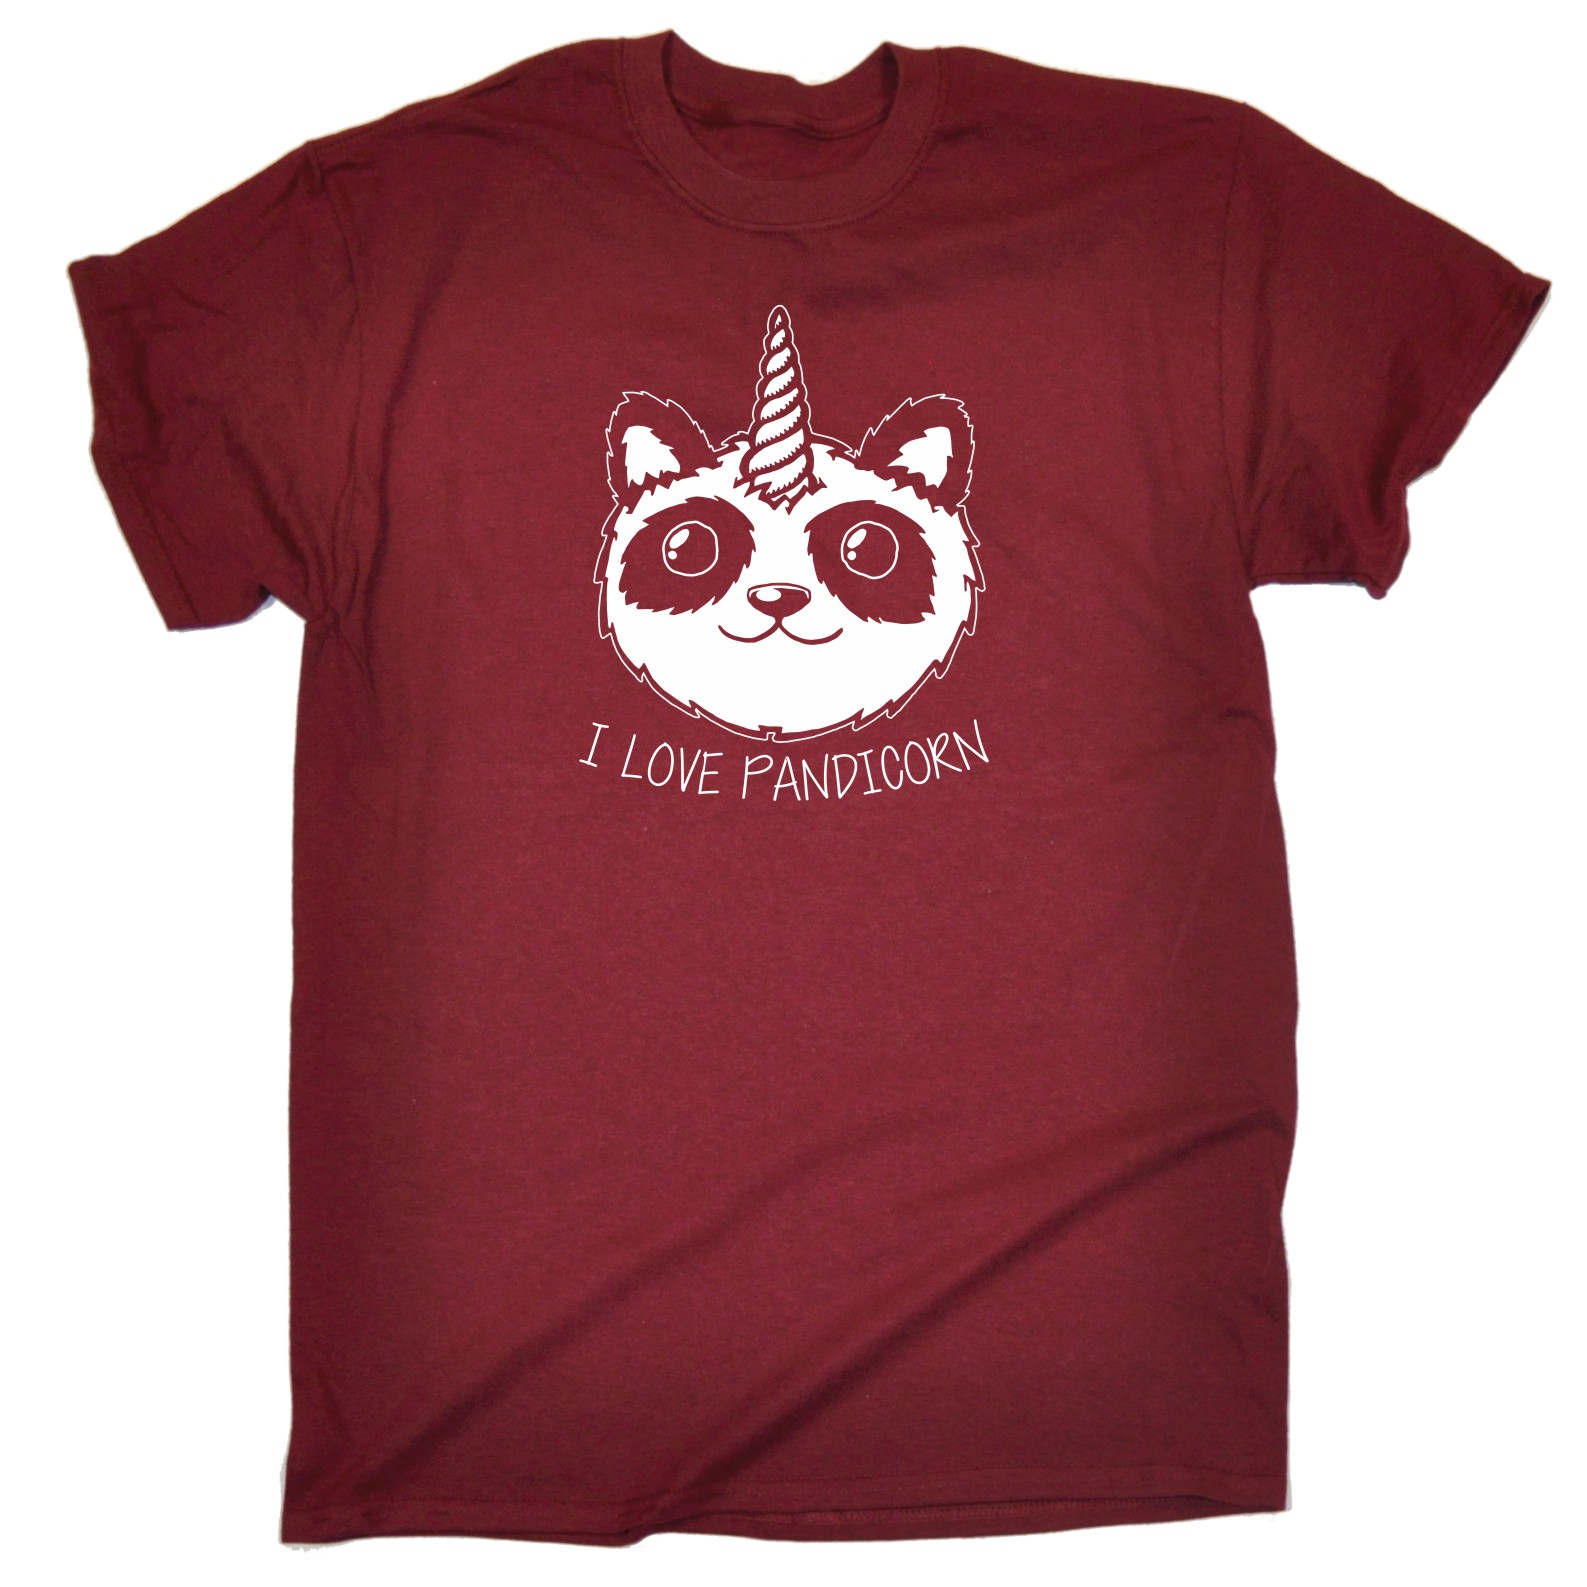 thumbnail 5  - I Love Pandicorn Panda Unicorn Animals Funny T-SHIRT Birthday gift present joke